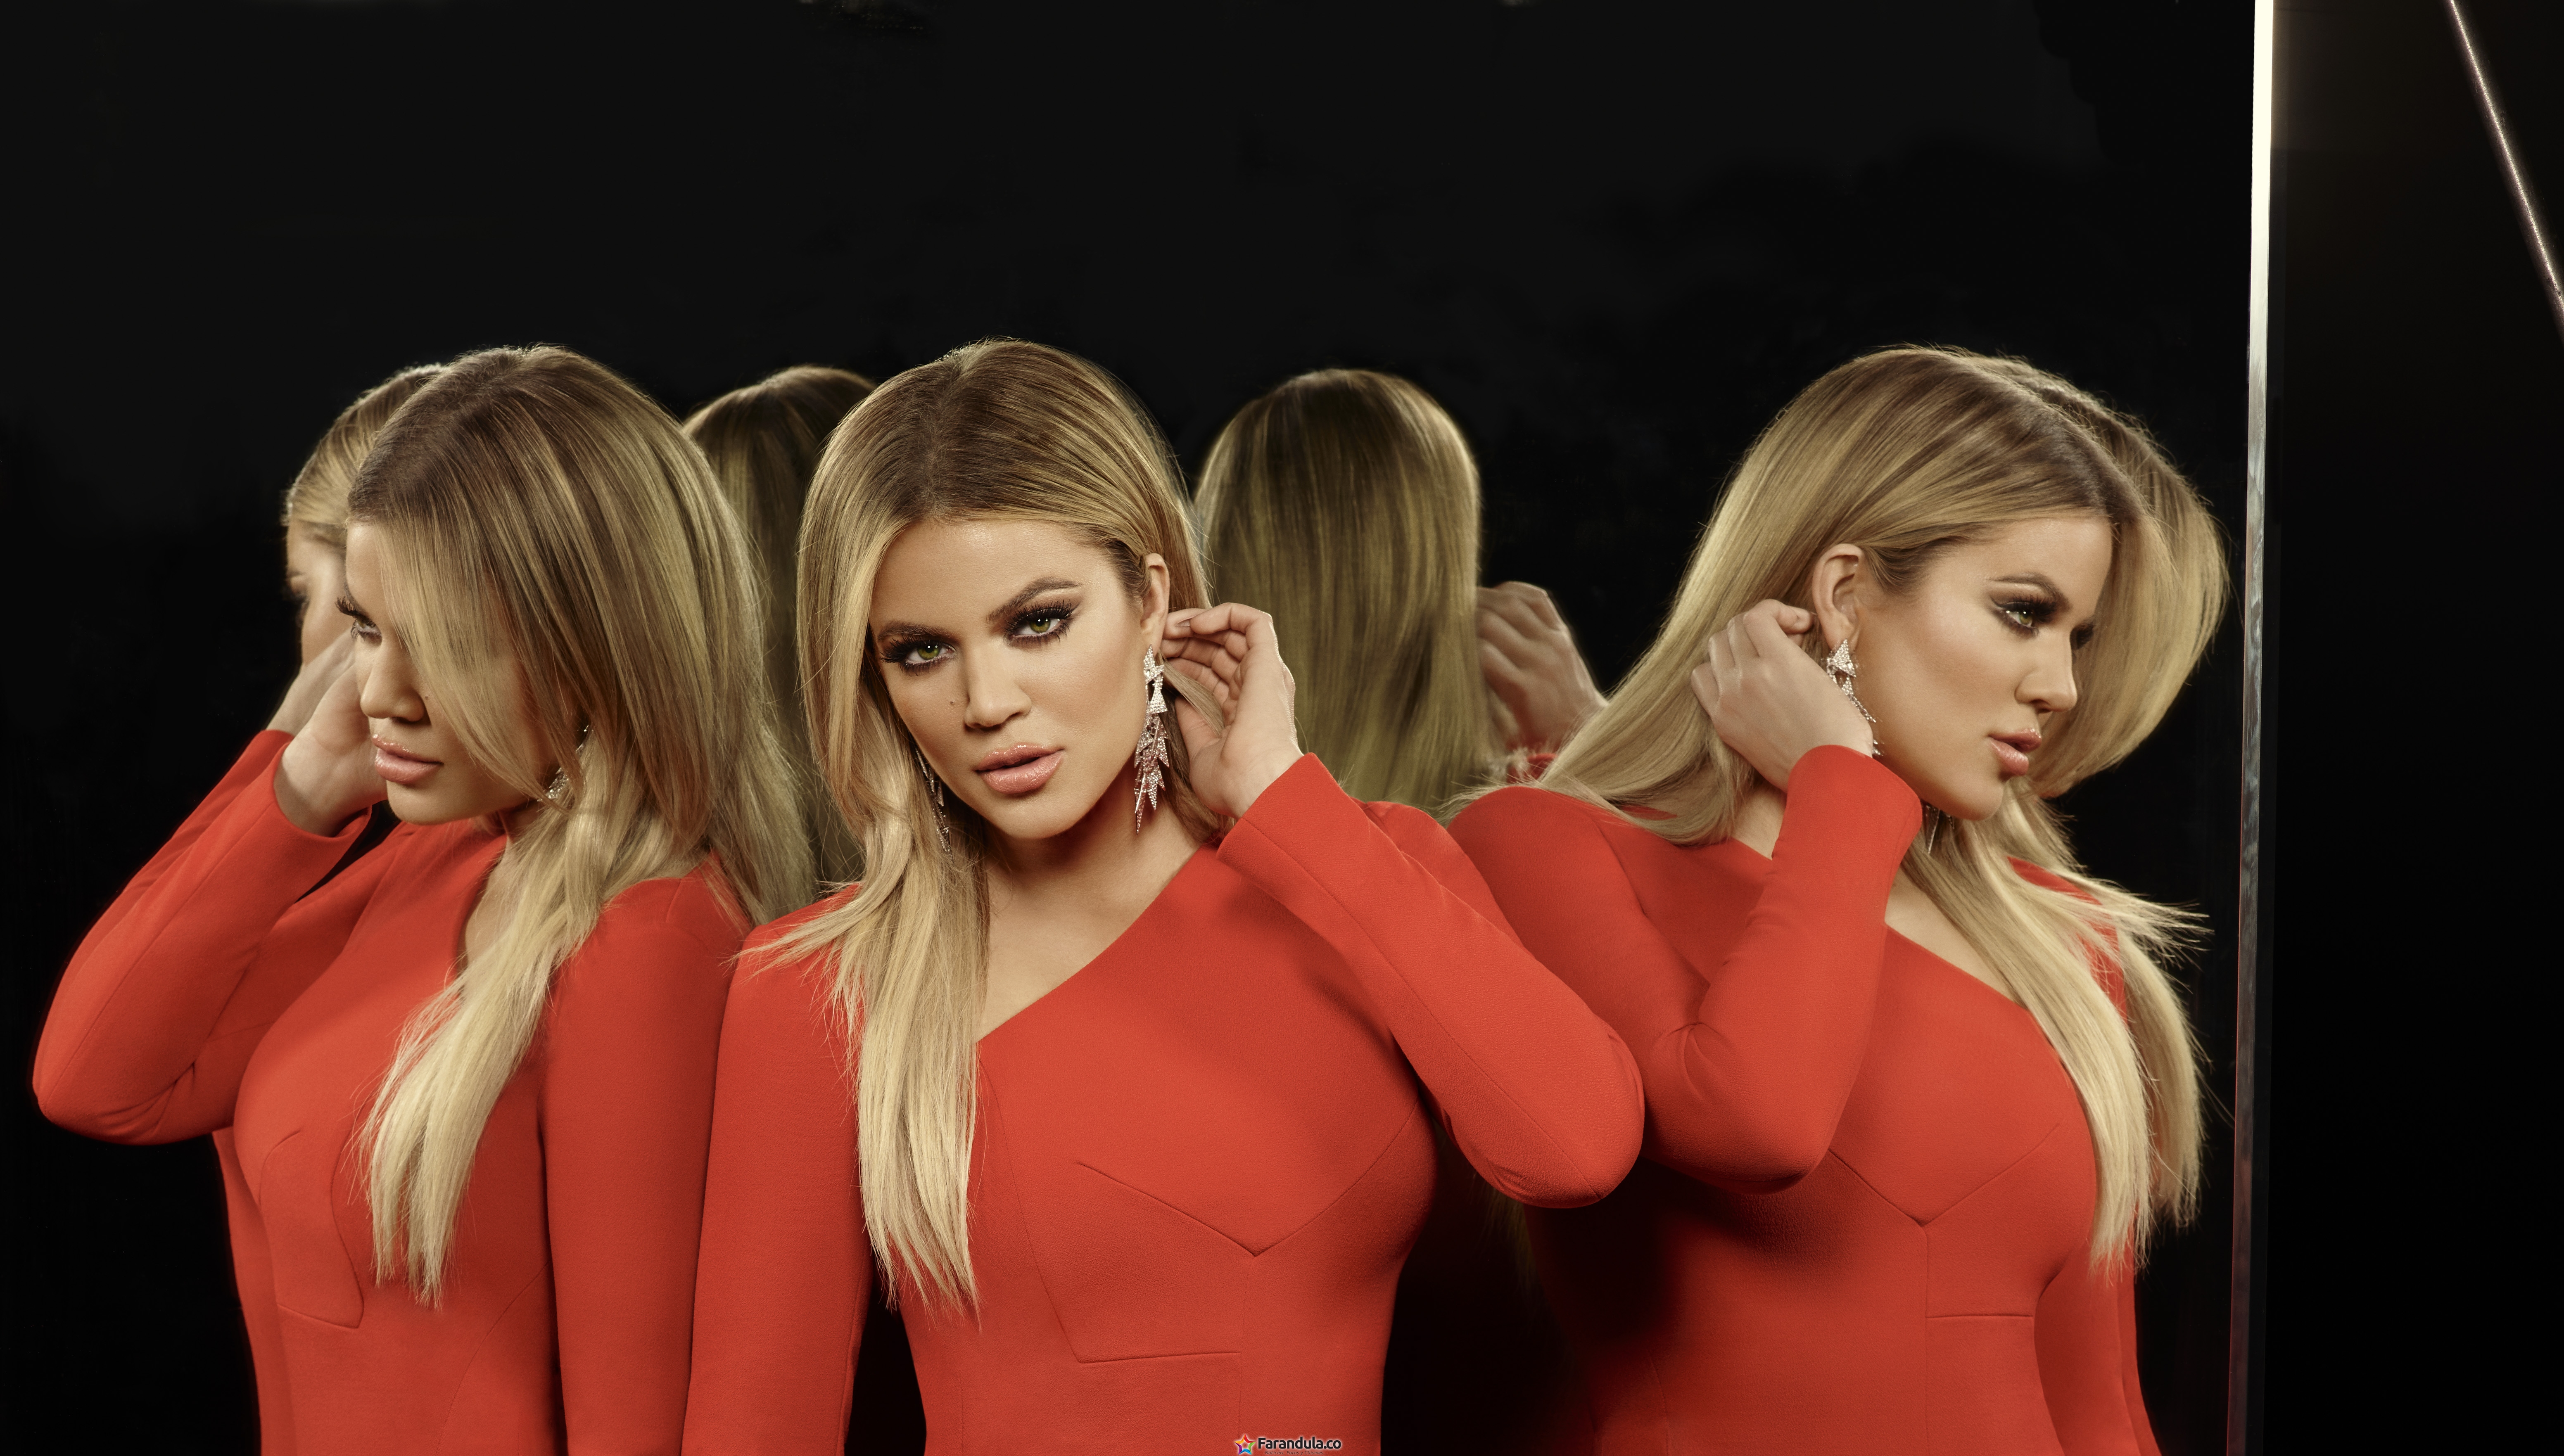 Wallpapers TV show girls Khloe Kardashian on the desktop